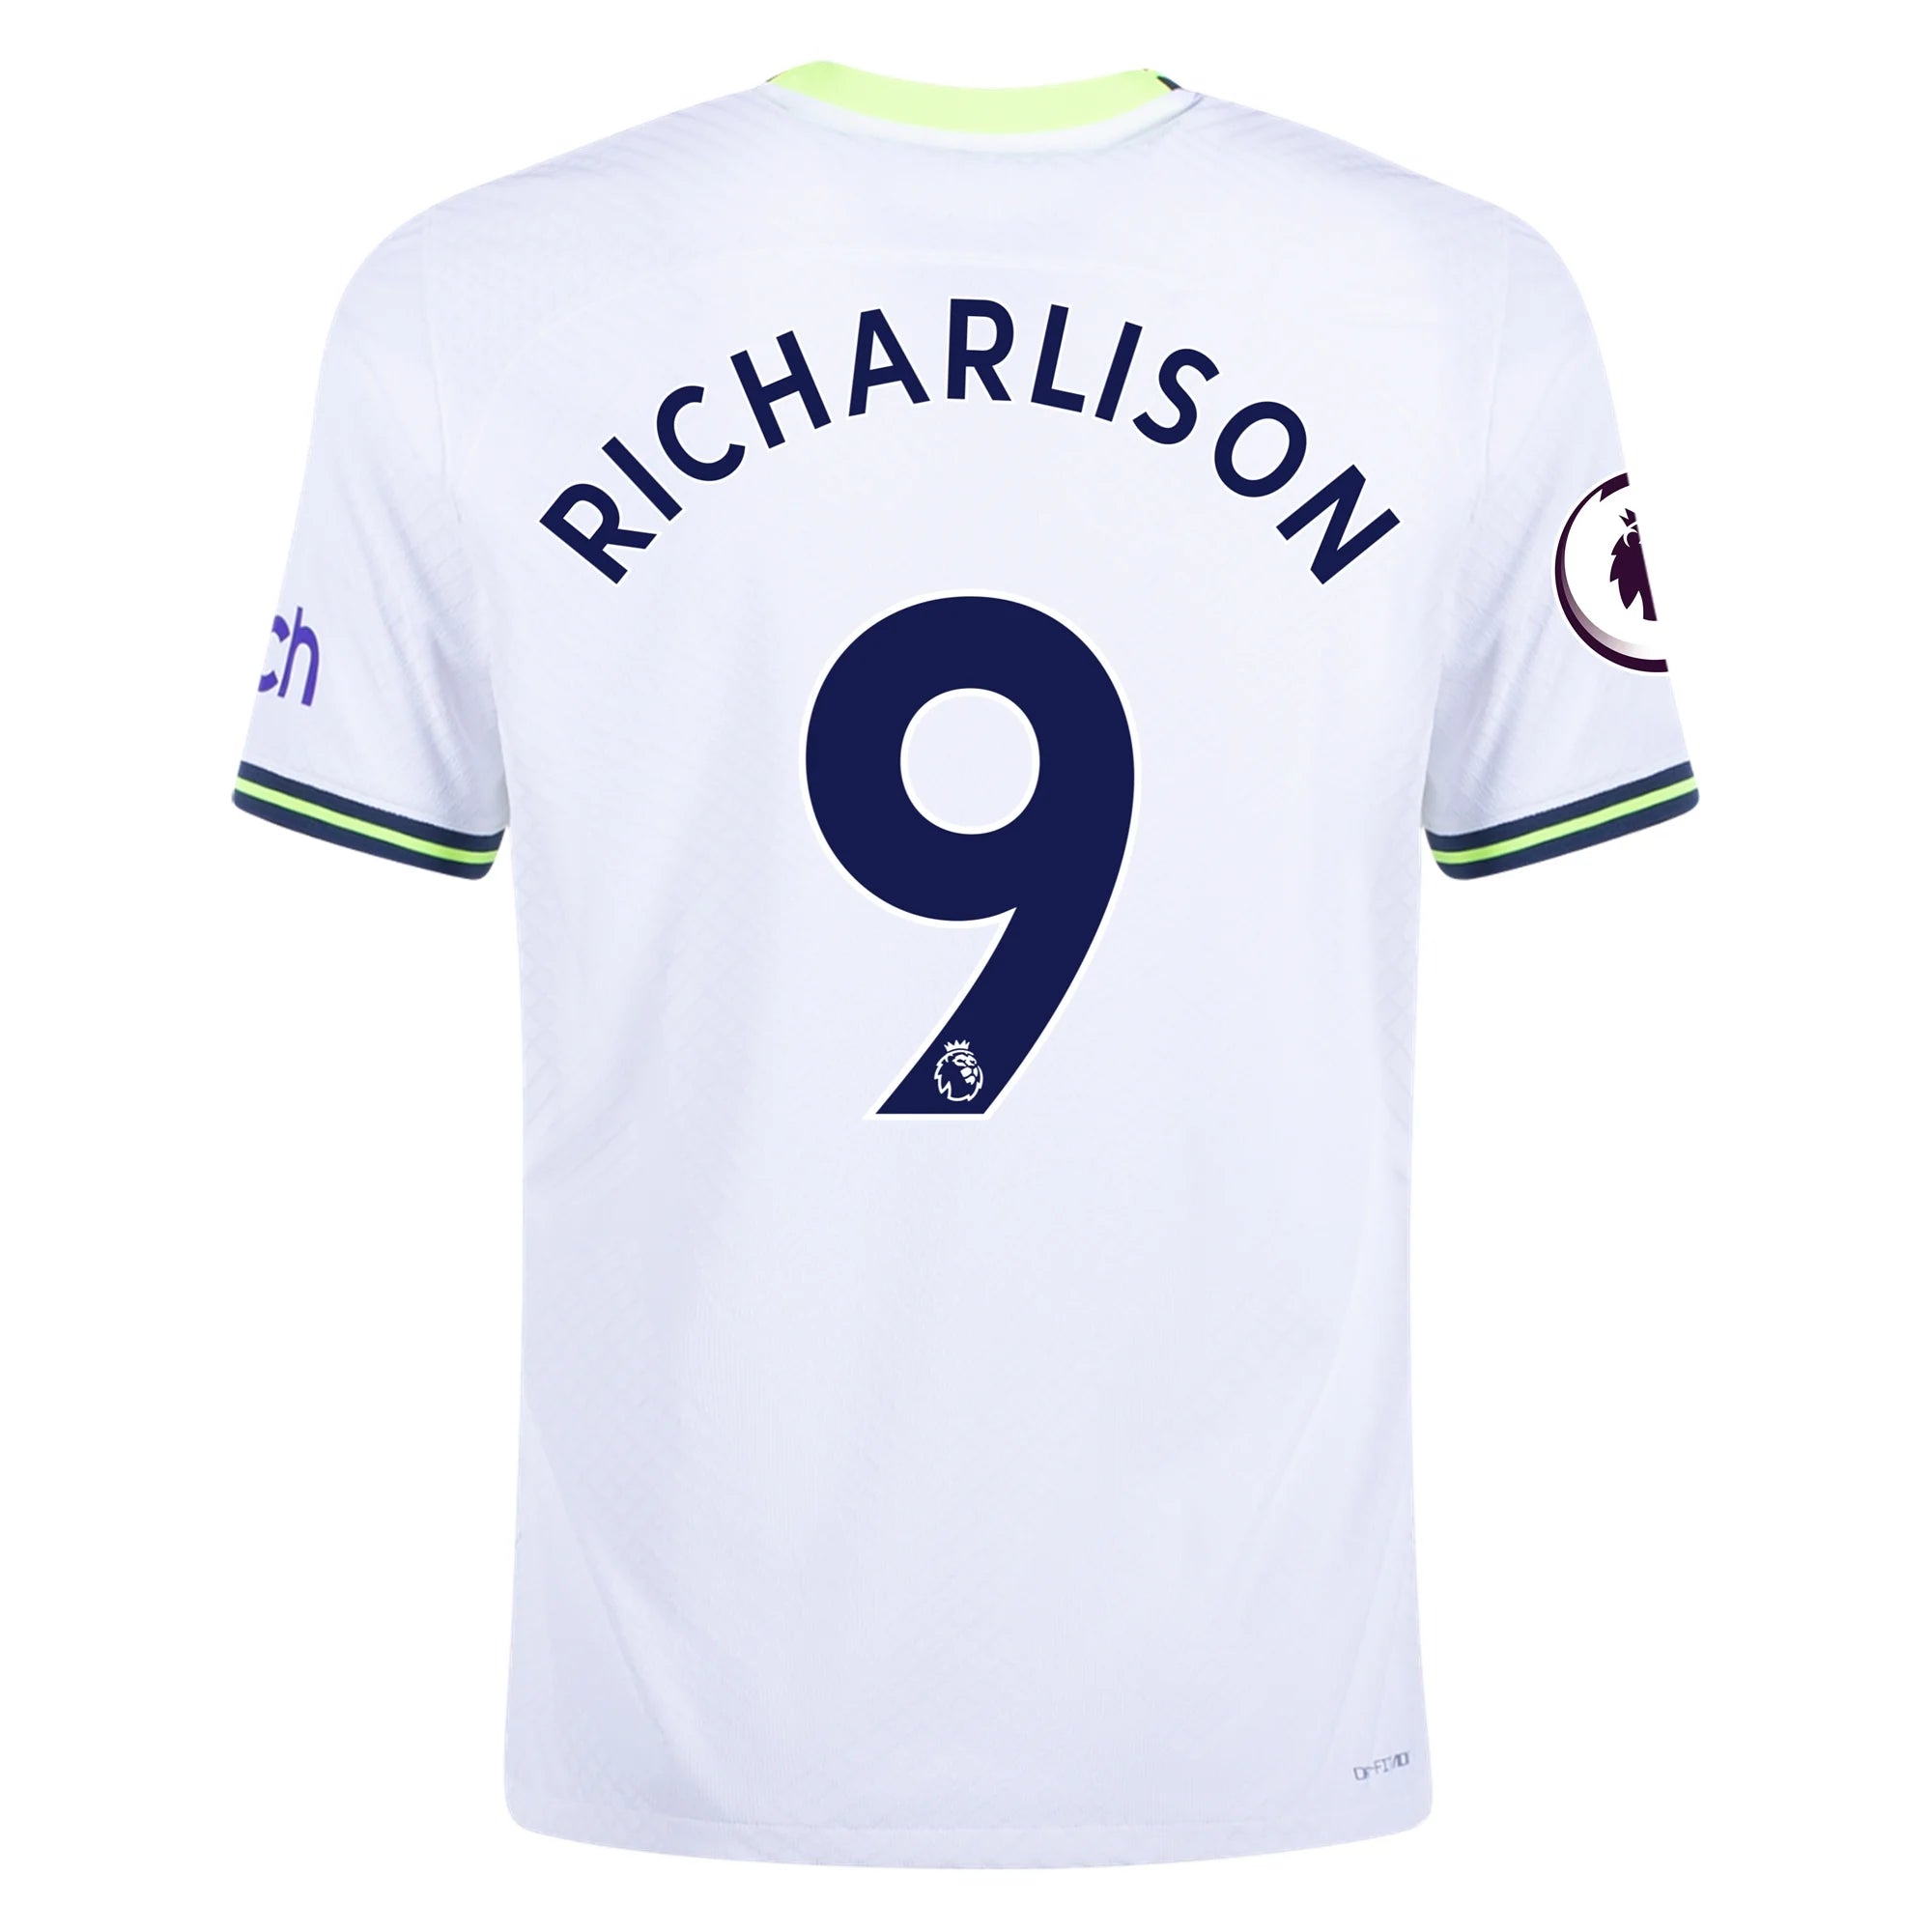 richarlison jersey number